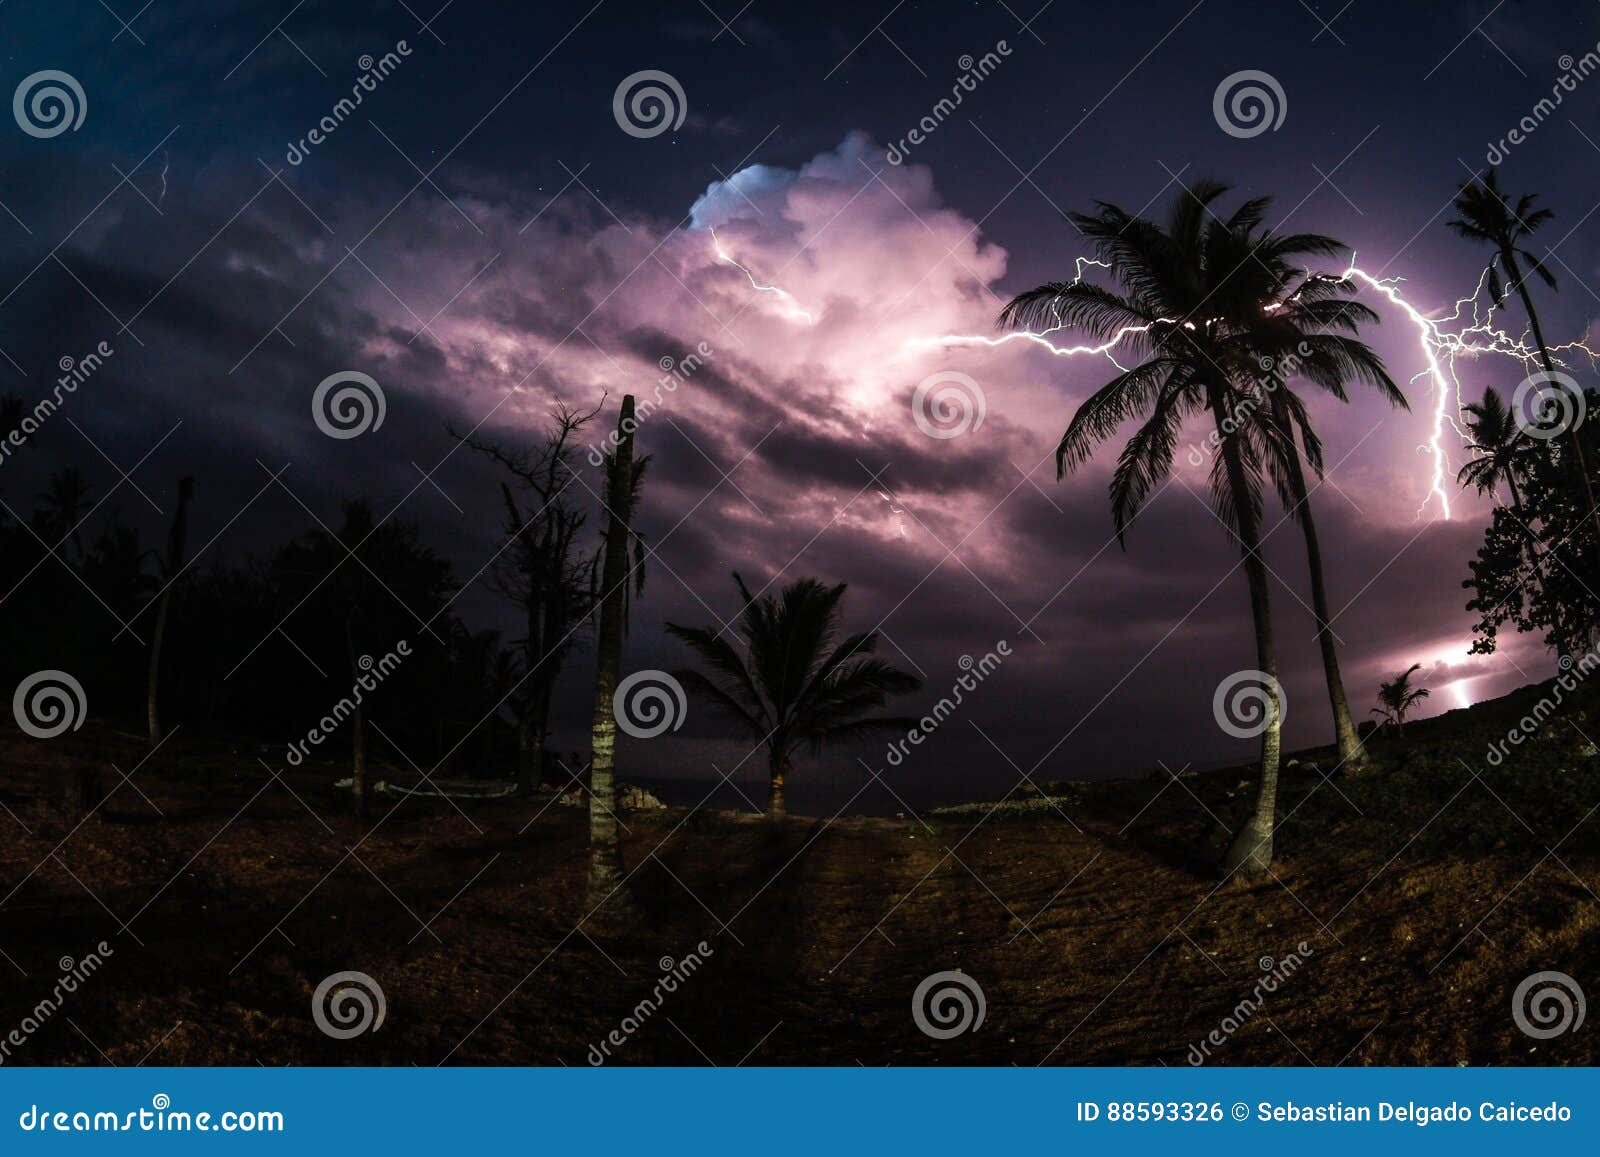 electric storm in isla fuerte